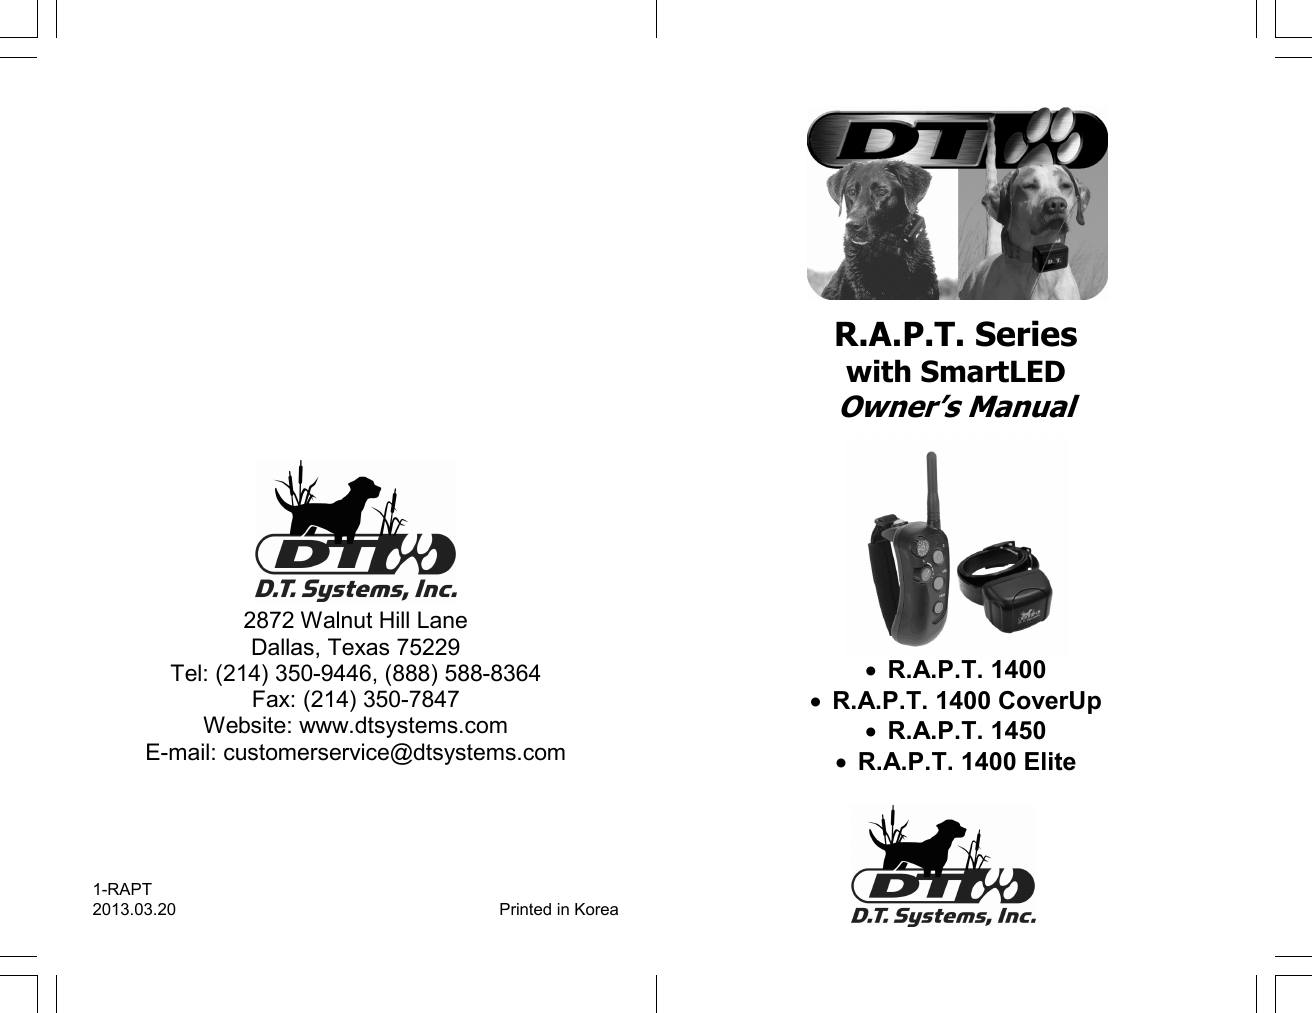 24 2872 Walnut Hill Lane Dallas, Texas 75229 Tel: (214) 350-9446, (888) 588-8364 Fax: (214) 350-7847 Website: www.dtsystems.com E-mail: customerservice@dtsystems.com 1-RAPT 2013.03.20  Printed in Korea    •  R.A.P.T. 1400 •  R.A.P.T. 1400 CoverUp •  R.A.P.T. 1450 •  R.A.P.T. 1400 Elite R.A.P.T. Series with SmartLED Owner’s Manual 